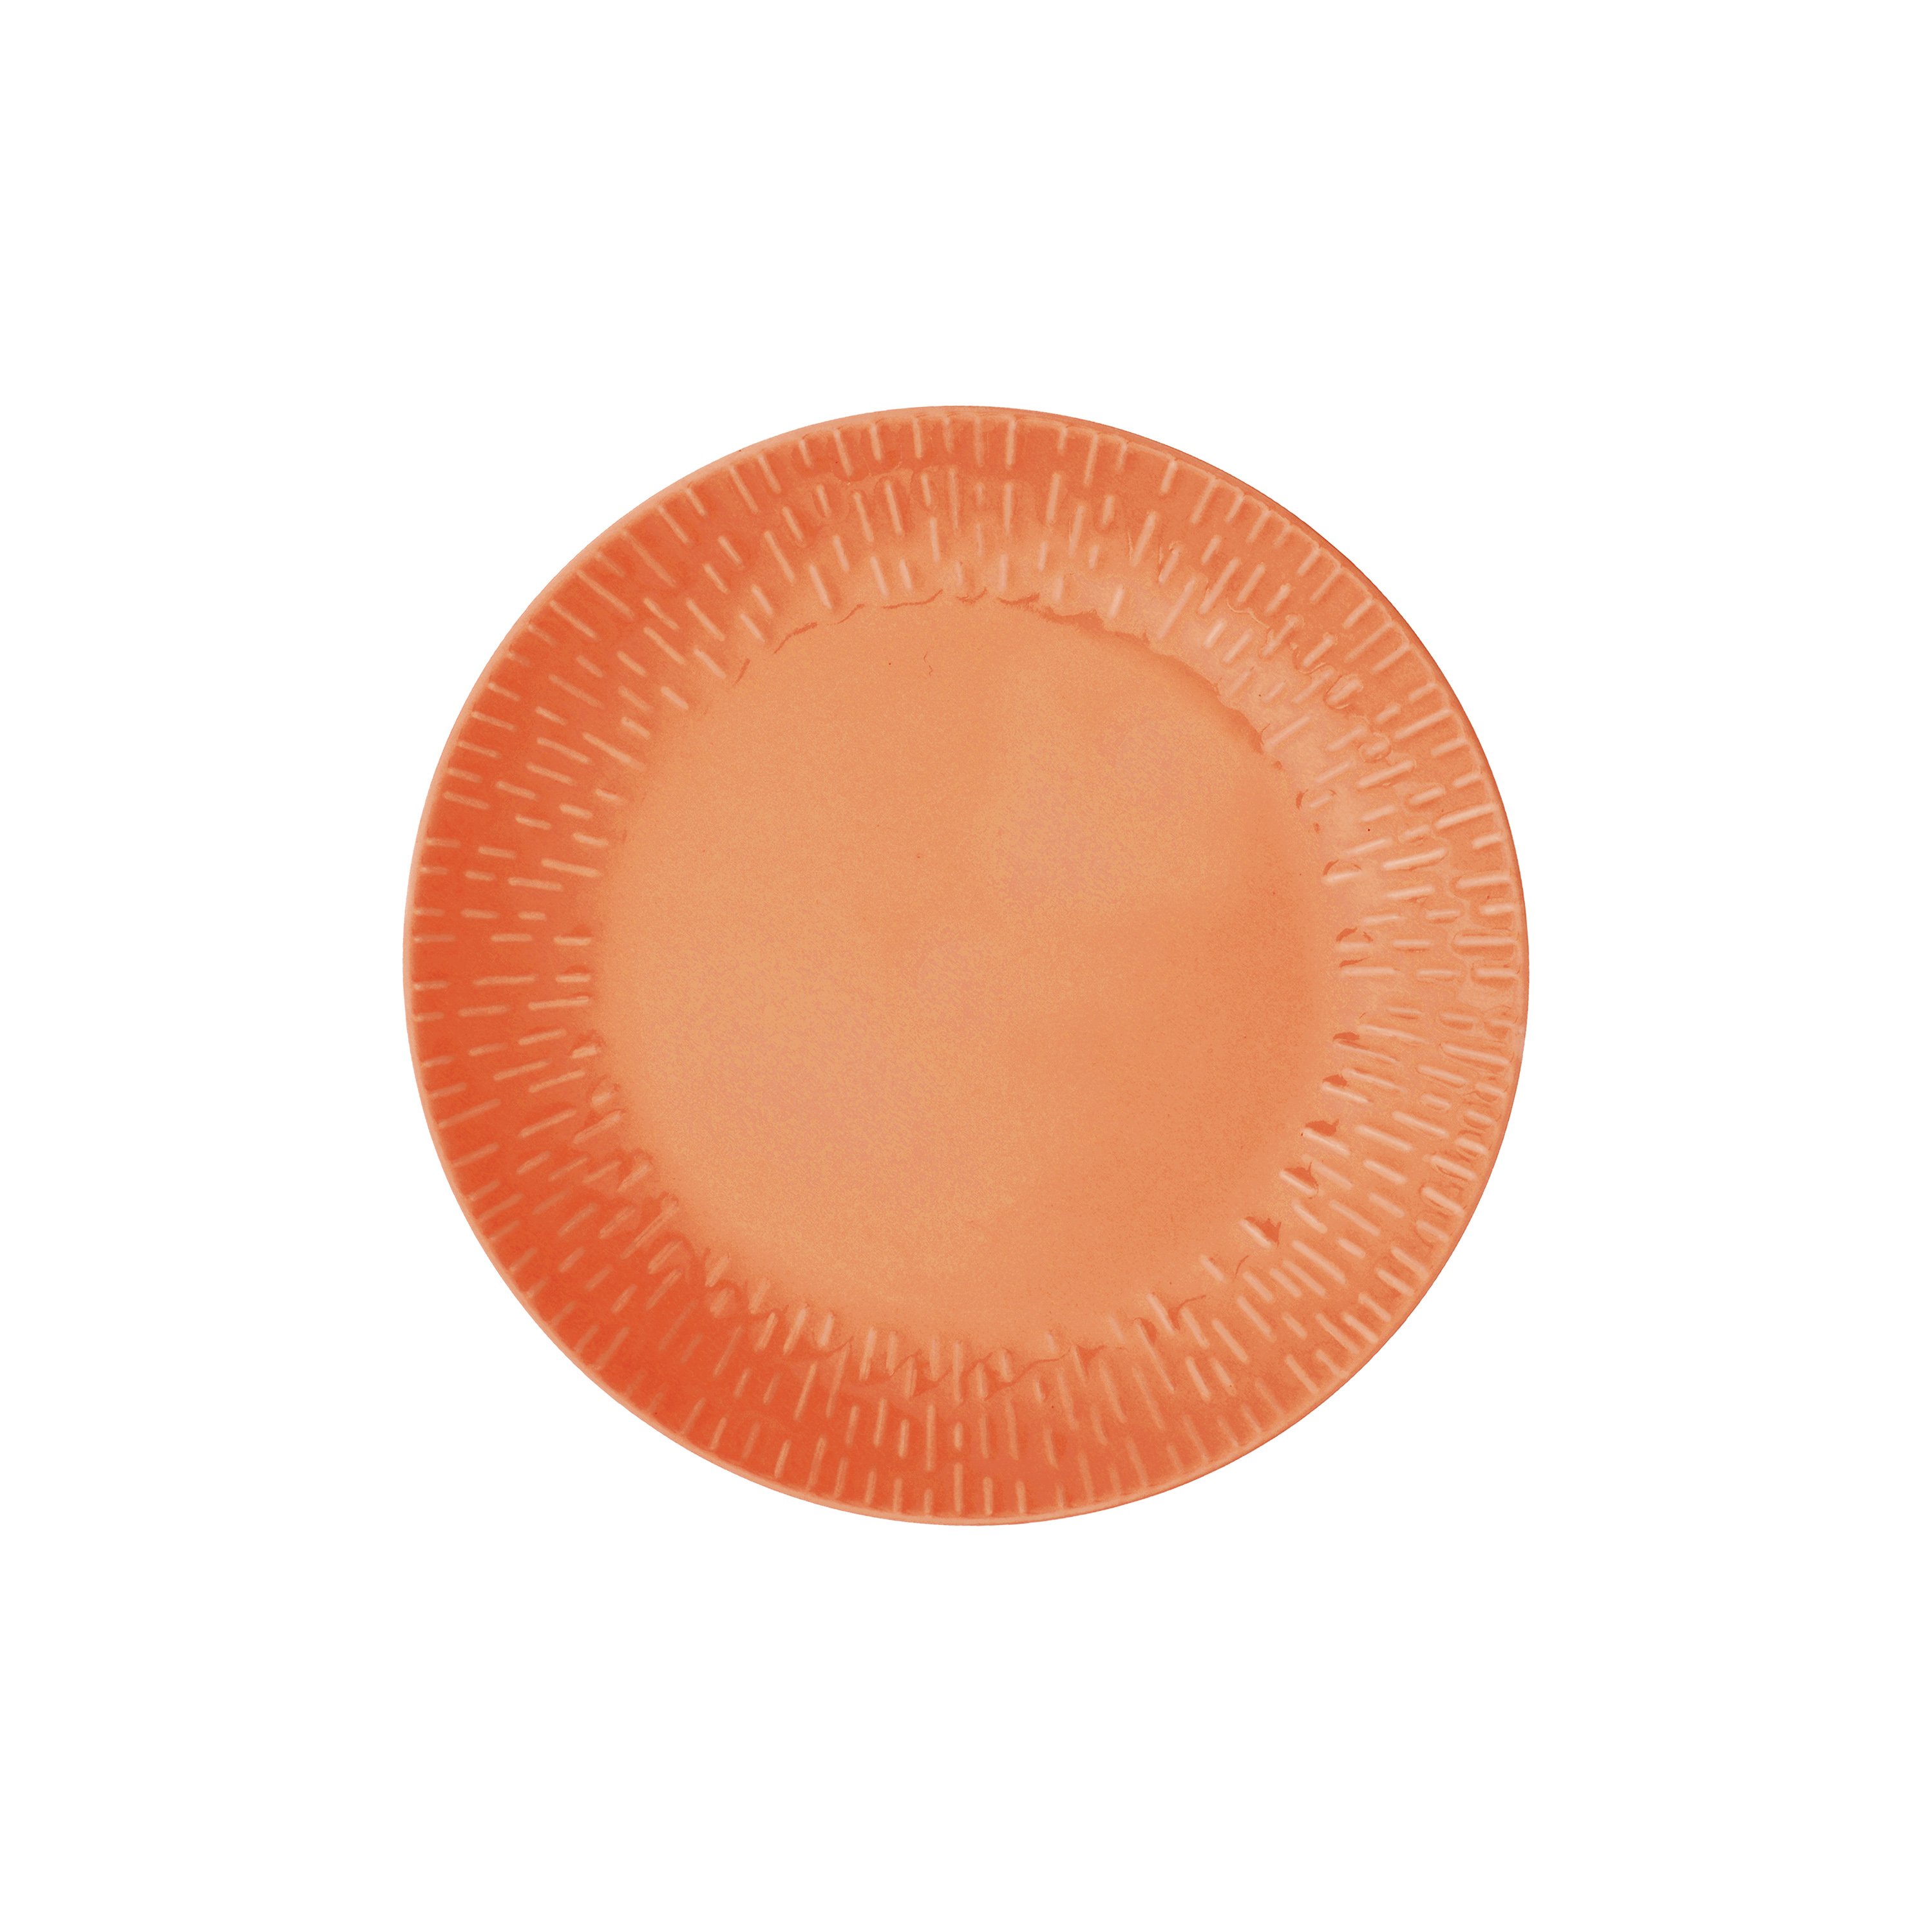 Aida - Life in Colour - Confetti - Apricot lunch plate w/relief porcelain (13326) - Hjemme og kjøkken